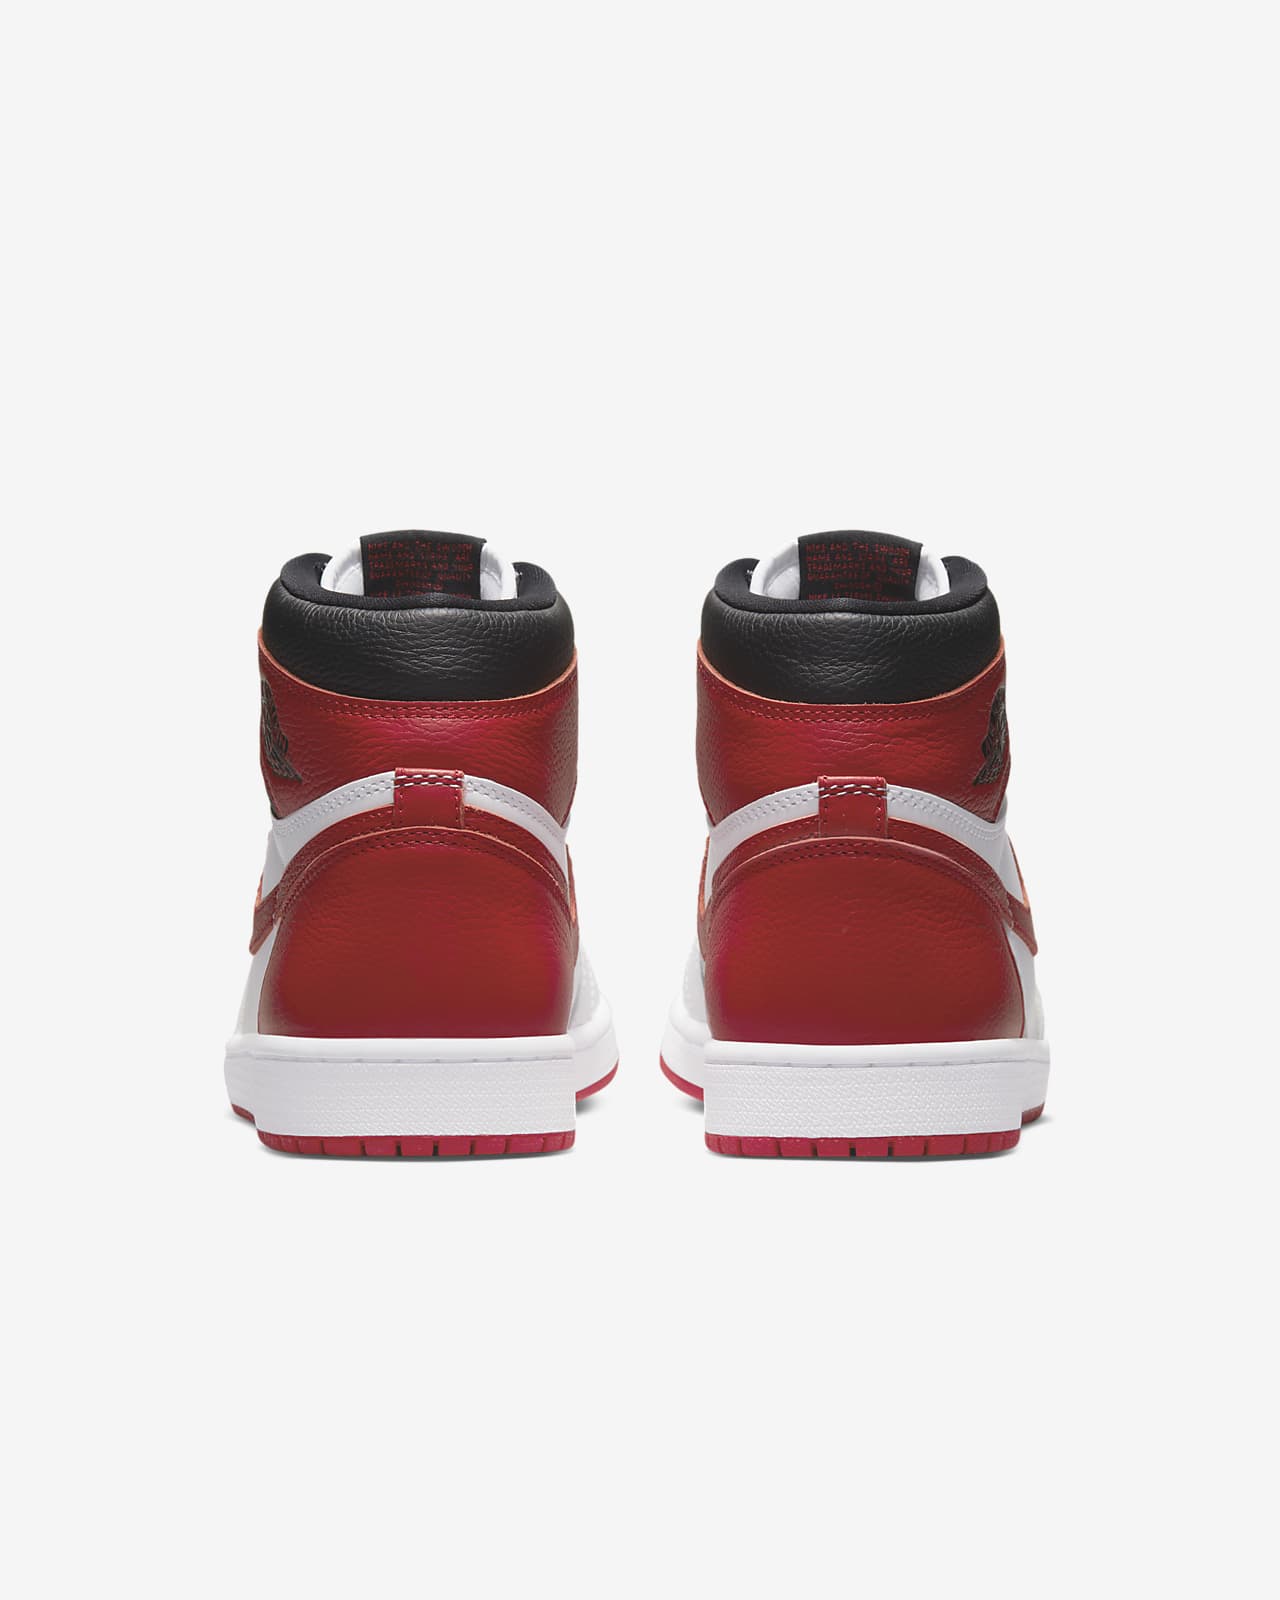 Air Jordan 1 Retro High OG Shoes